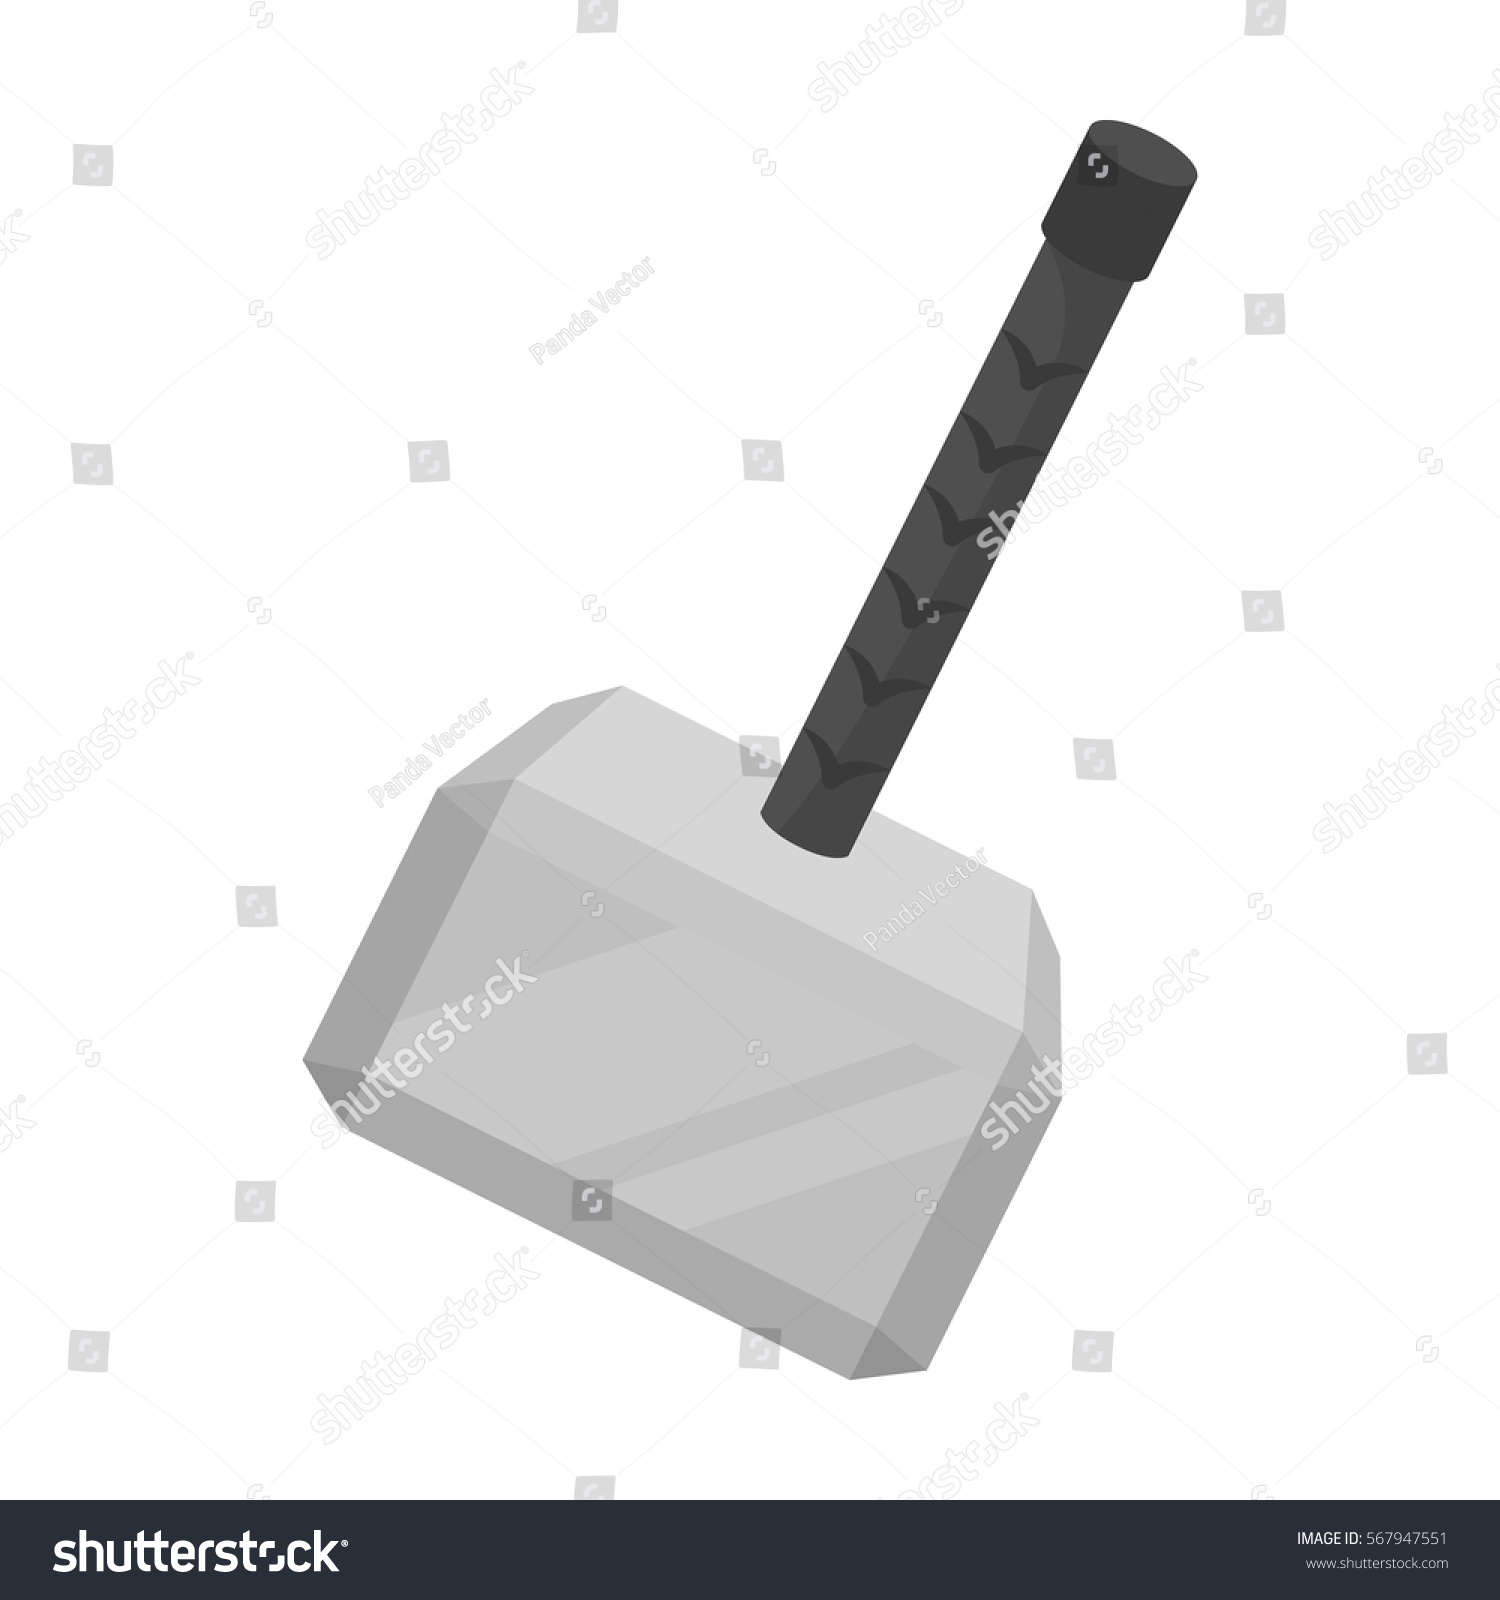 SVG of Viking battle hammer icon in monochrome style isolated on white background. Vikings symbol stock vector illustration. svg